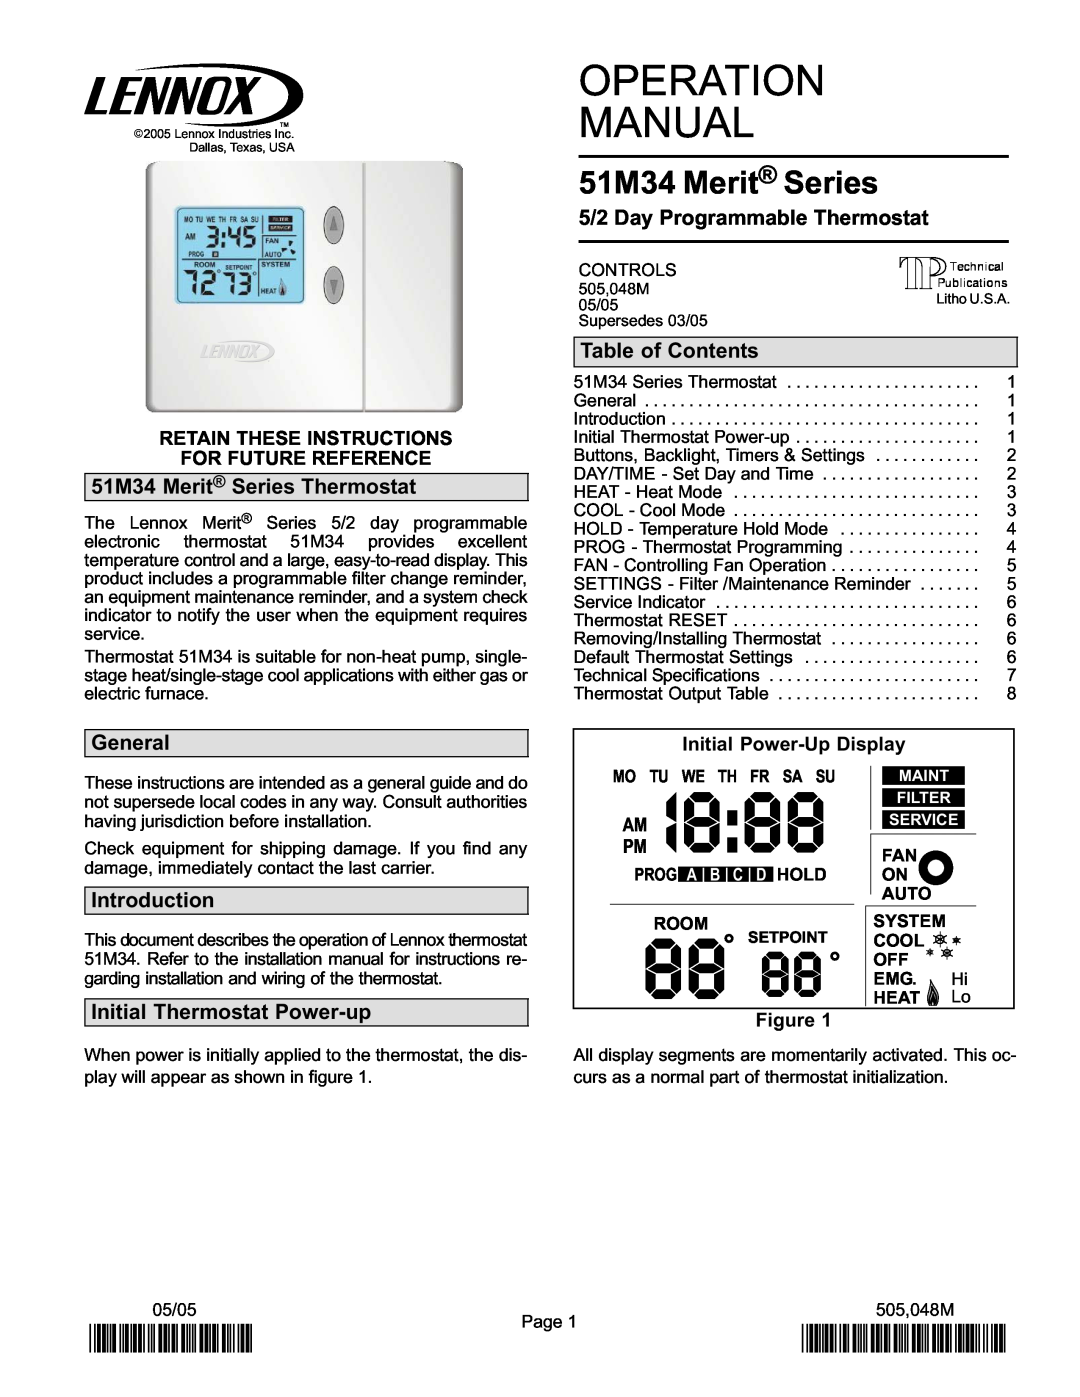 Lennox International Inc 51M37 P505048M, 51M34 Merit Series Thermostat, I8, 2P0505, General, Introduction 